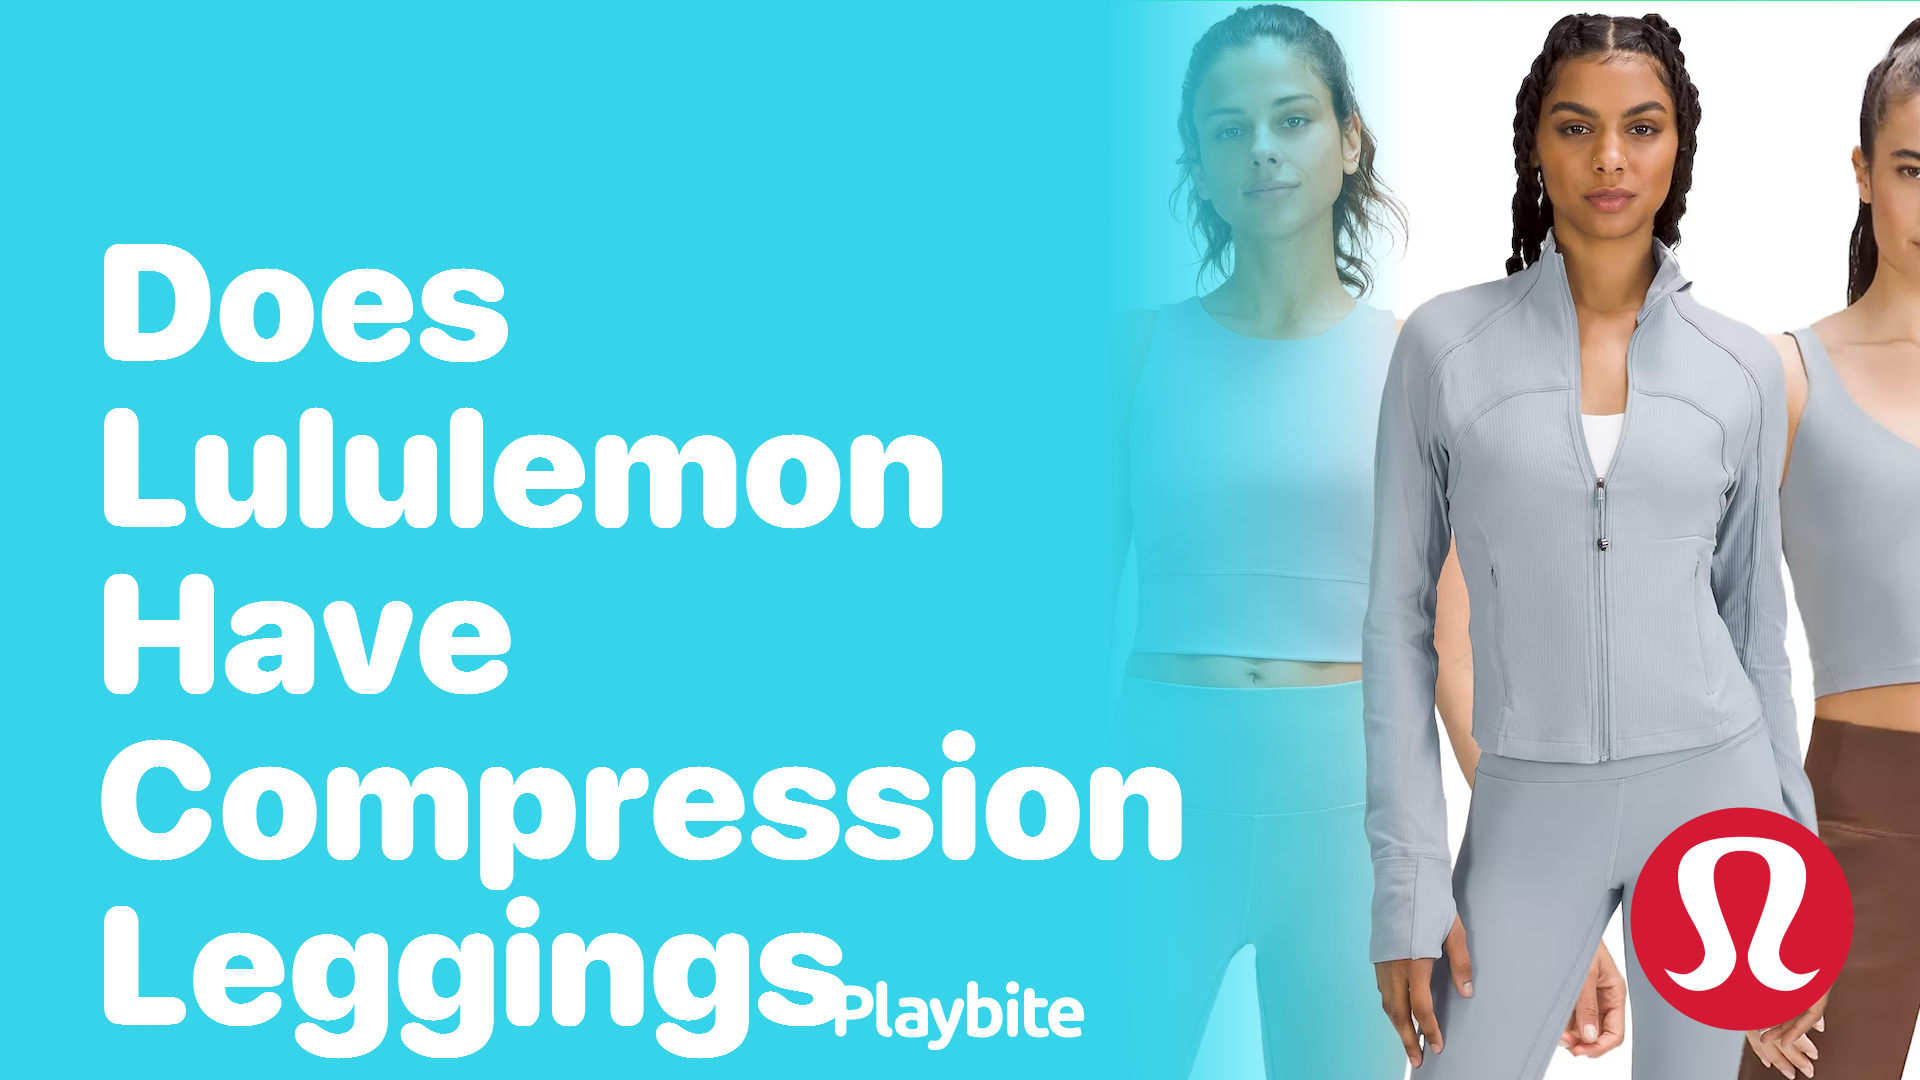 Lululemon Compression Leggings